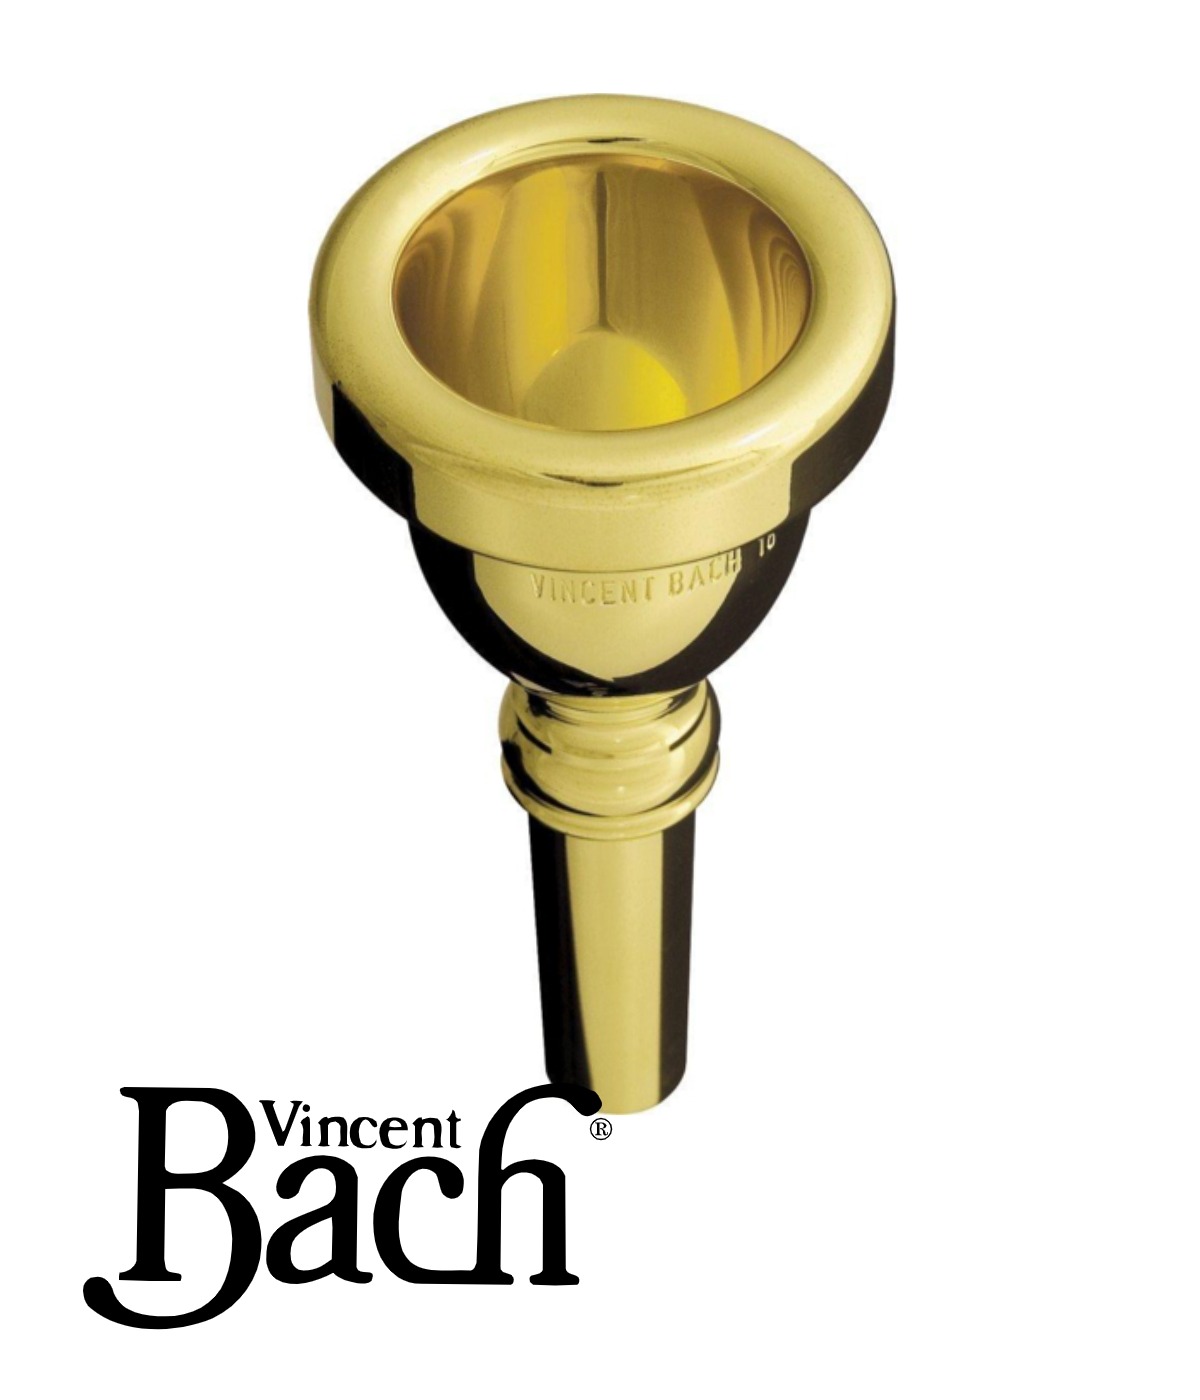 Bach Tuba Mouthpiece Standard Series 